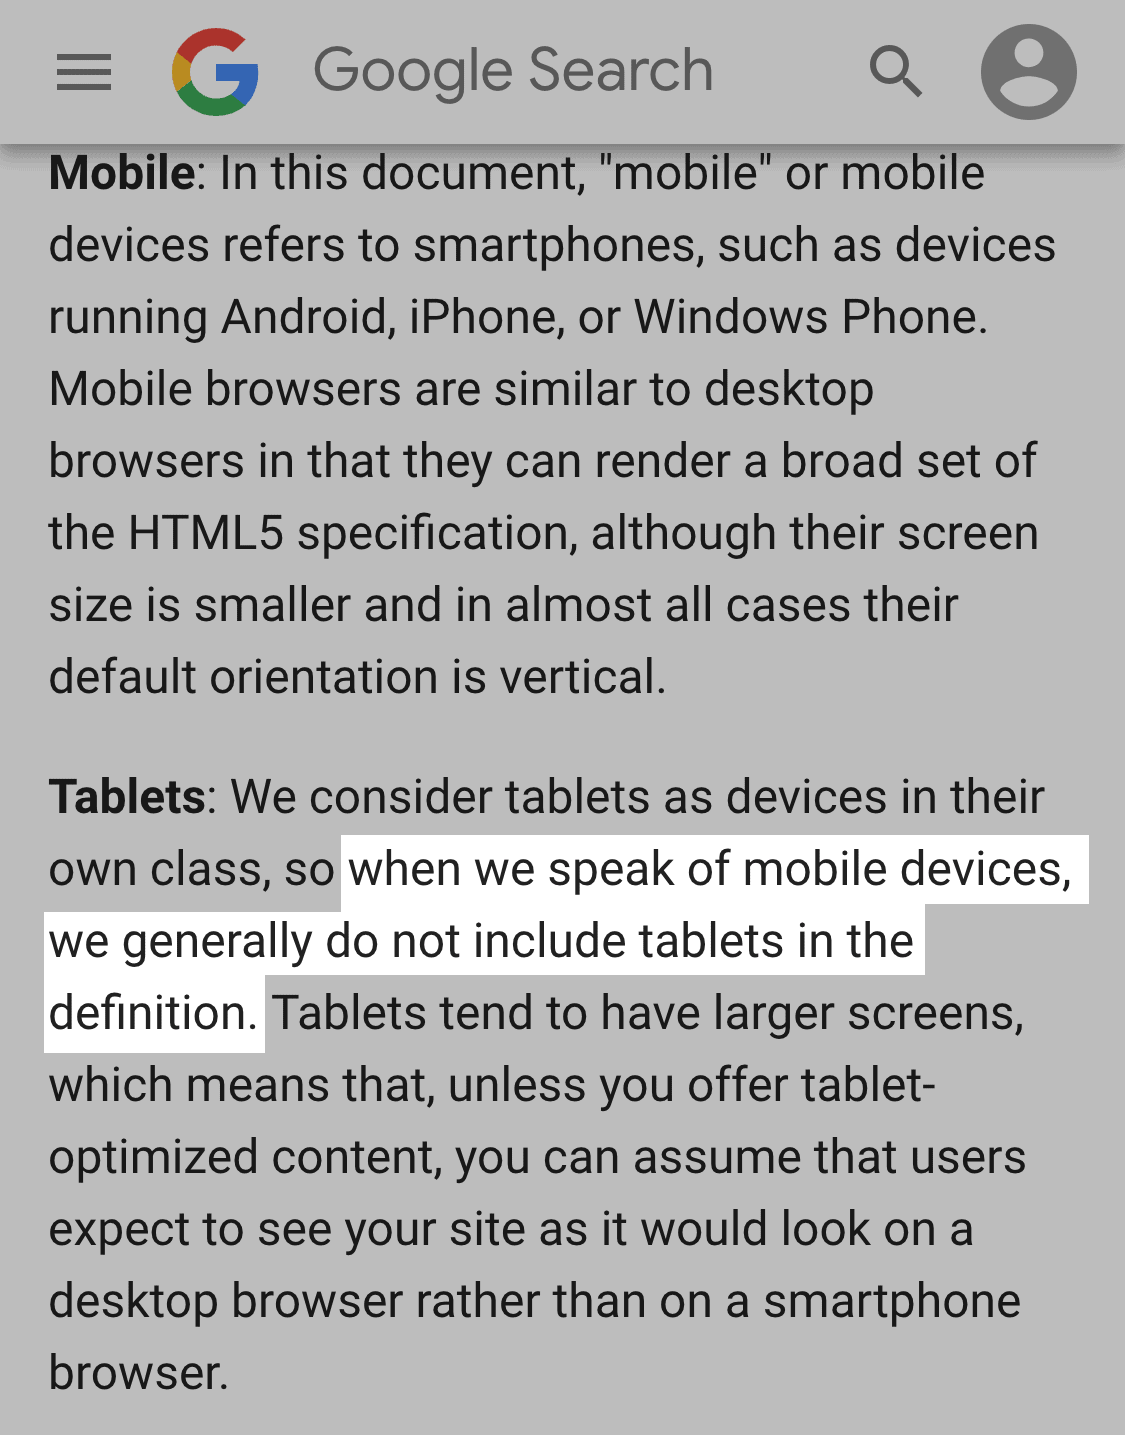 Google doesn't consider tablets "Mobile"